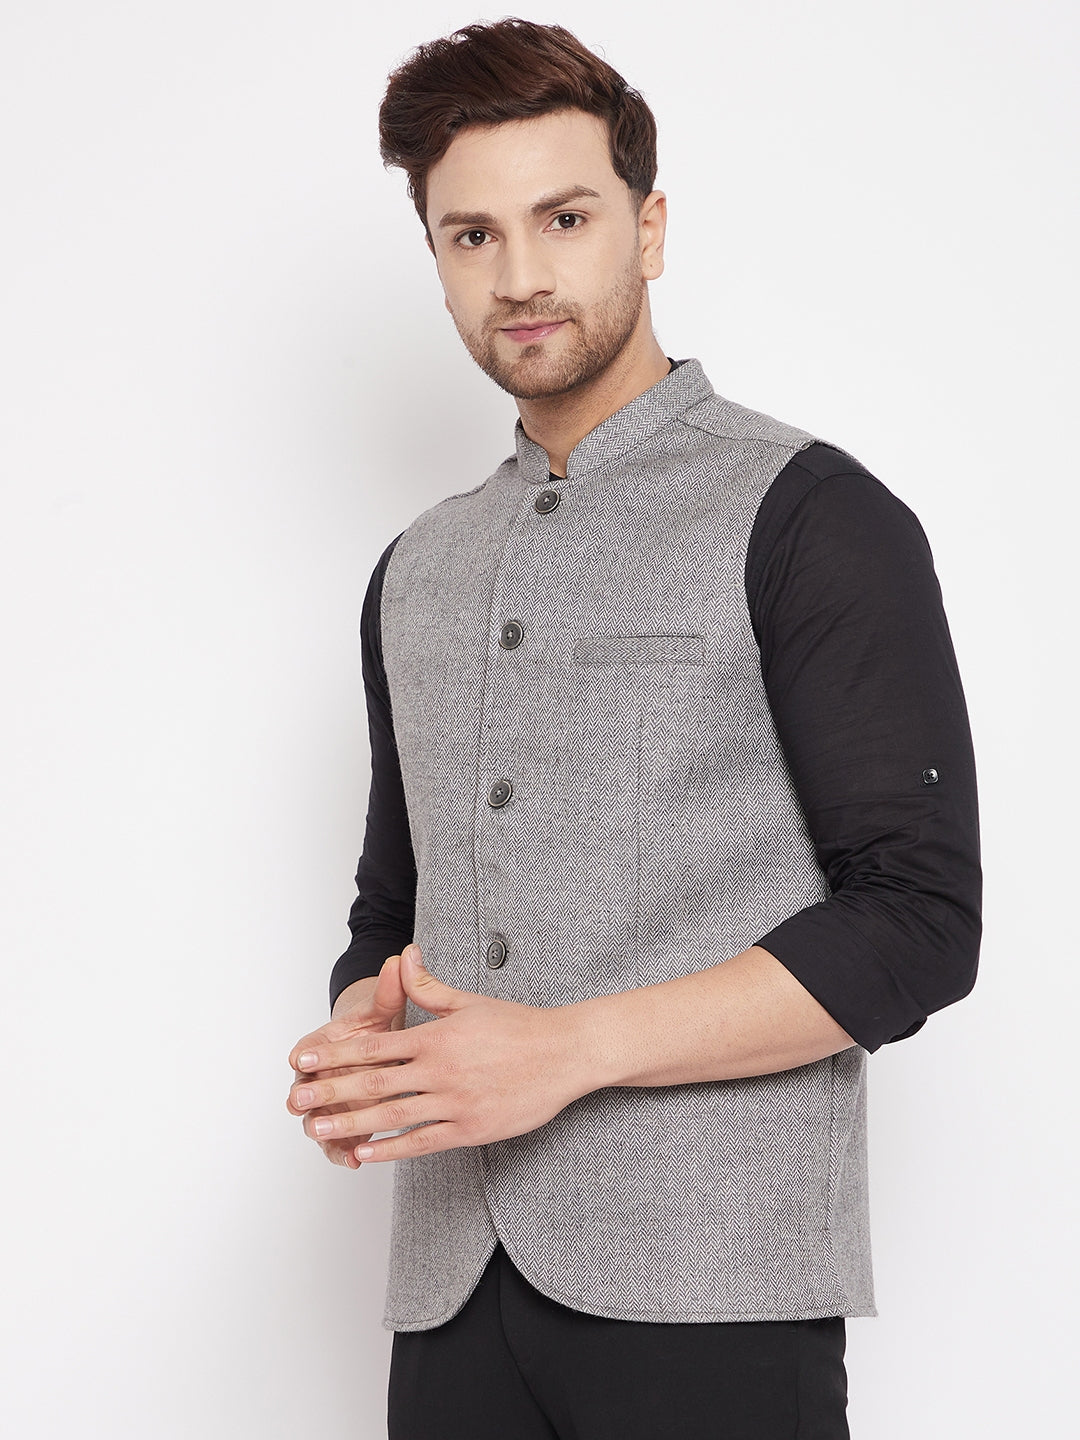 Men's Grey Color Woven Nehru Jacket - Even Apparels